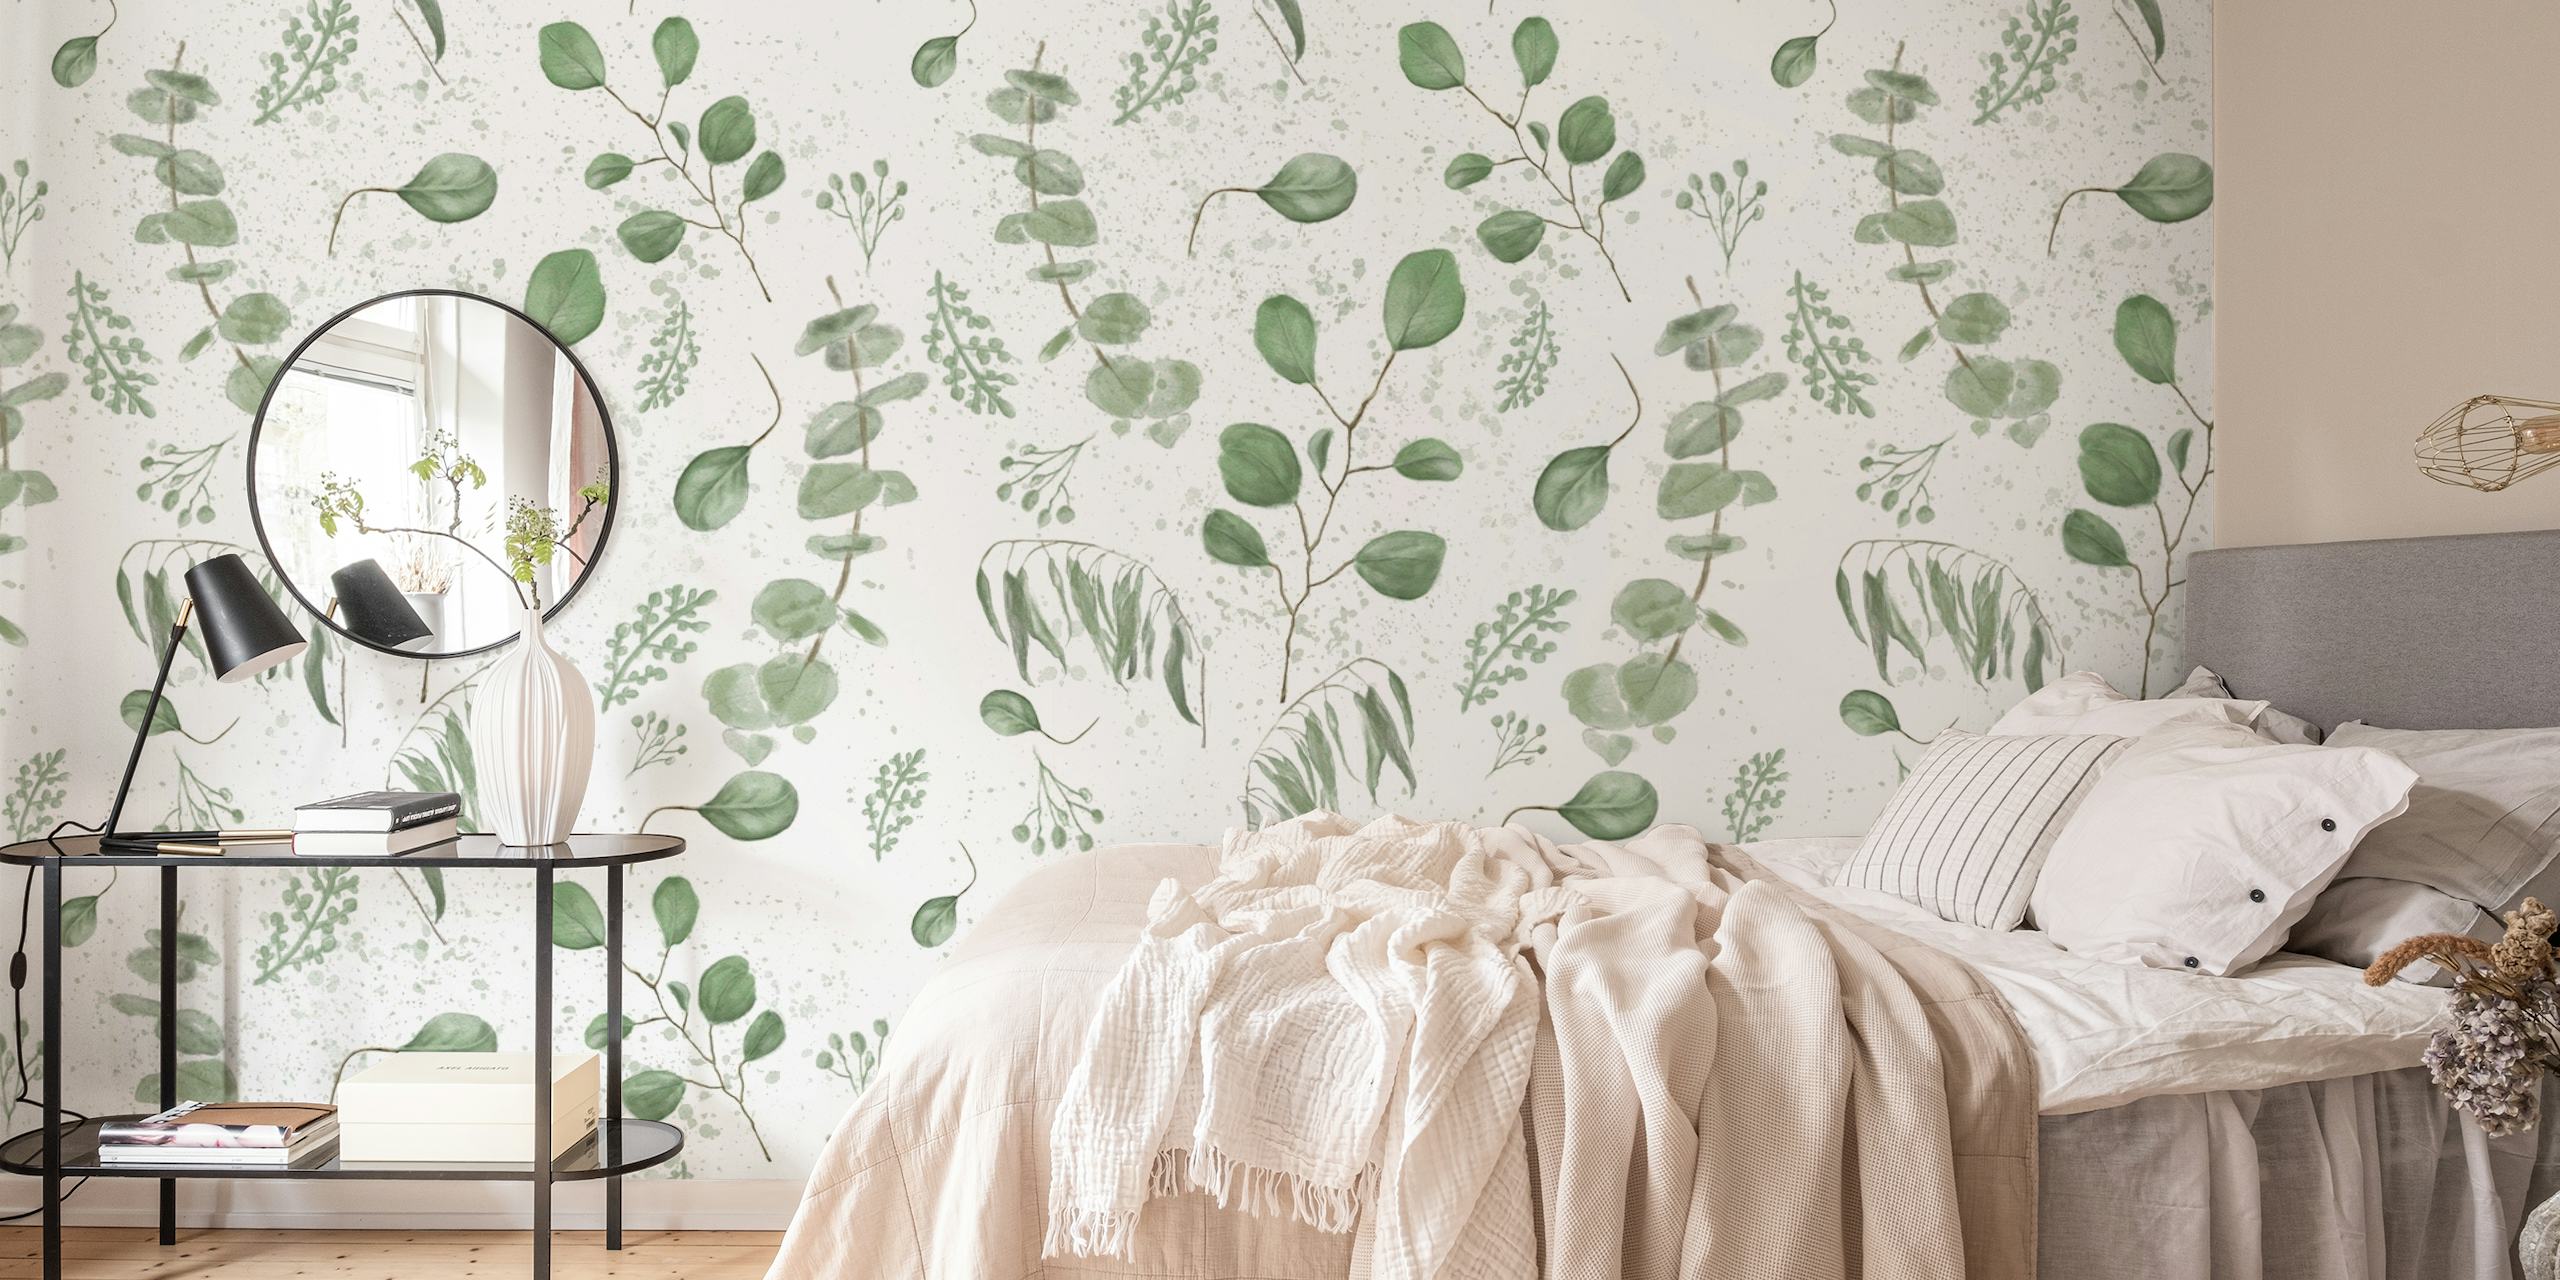 Watercolor eucalyptus pattern wall mural in pale green hues